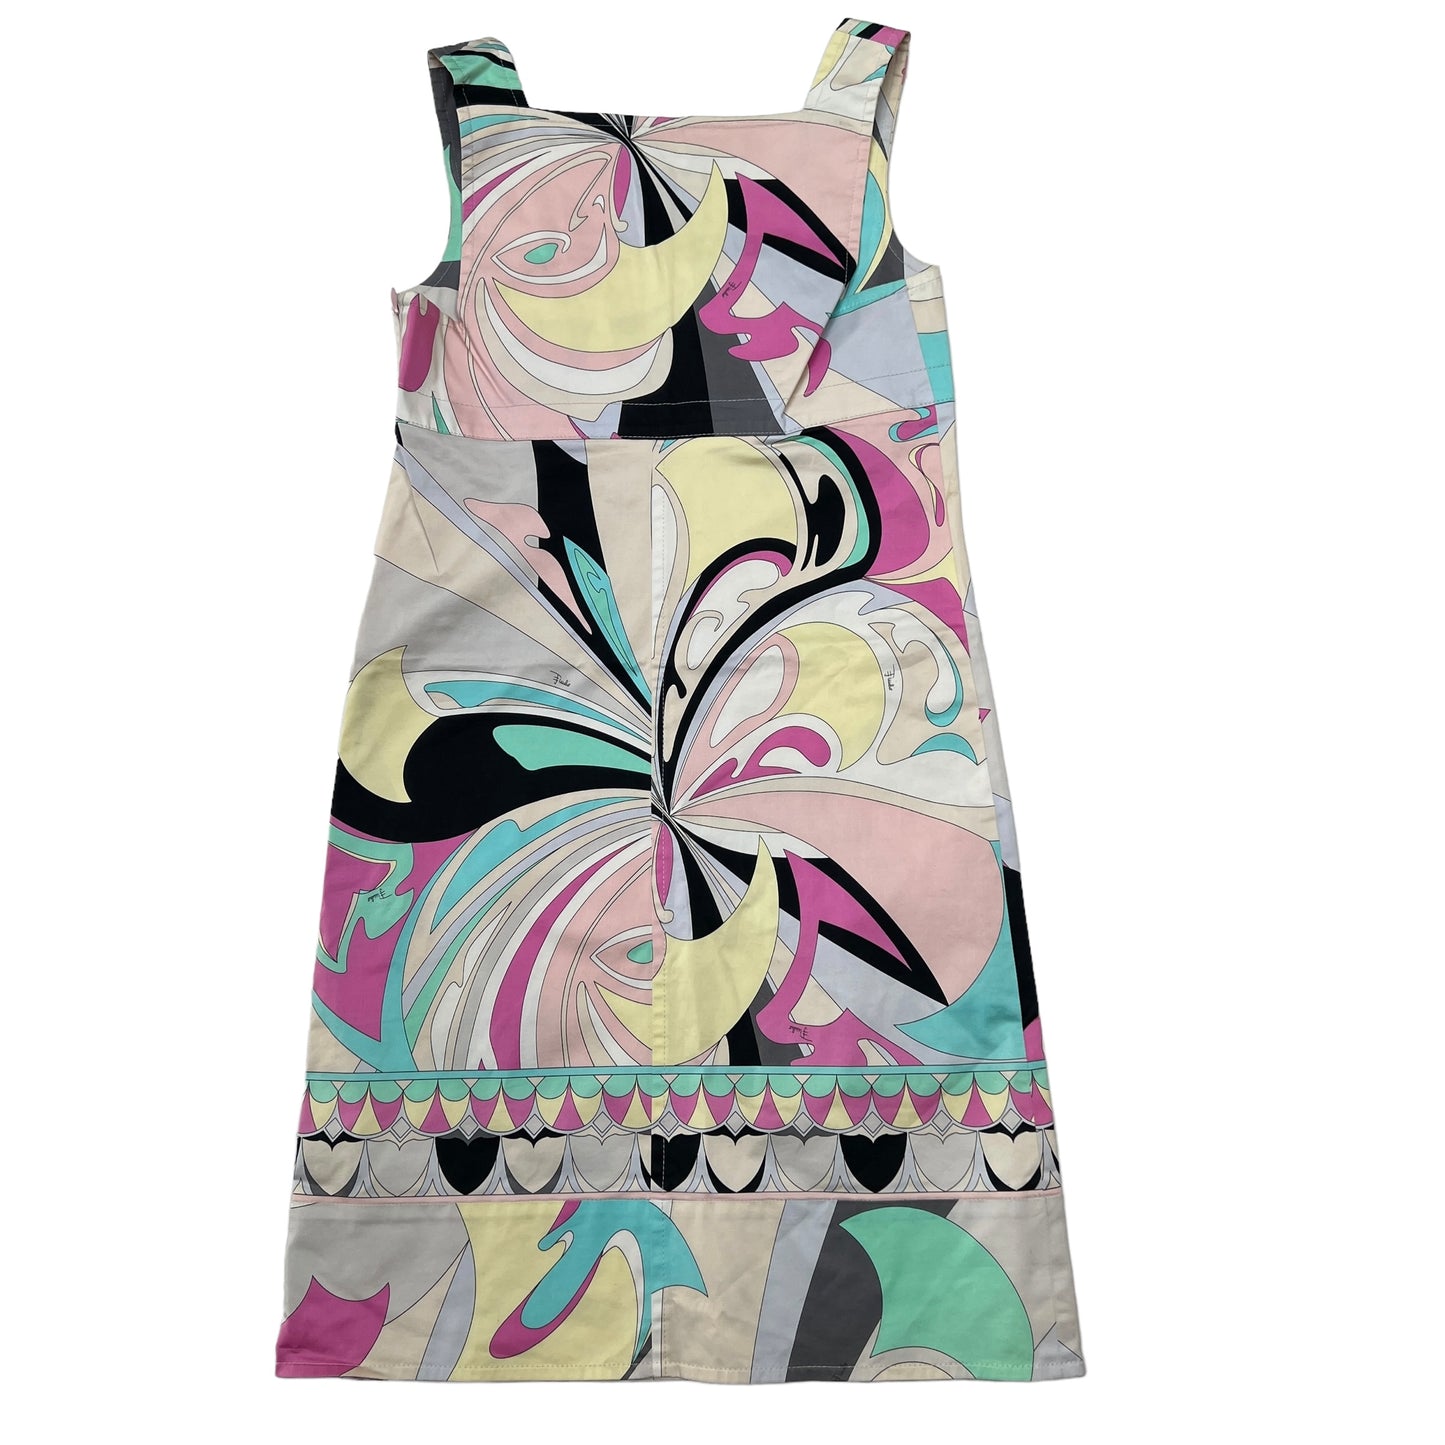 Multicolor Printed Dress - M